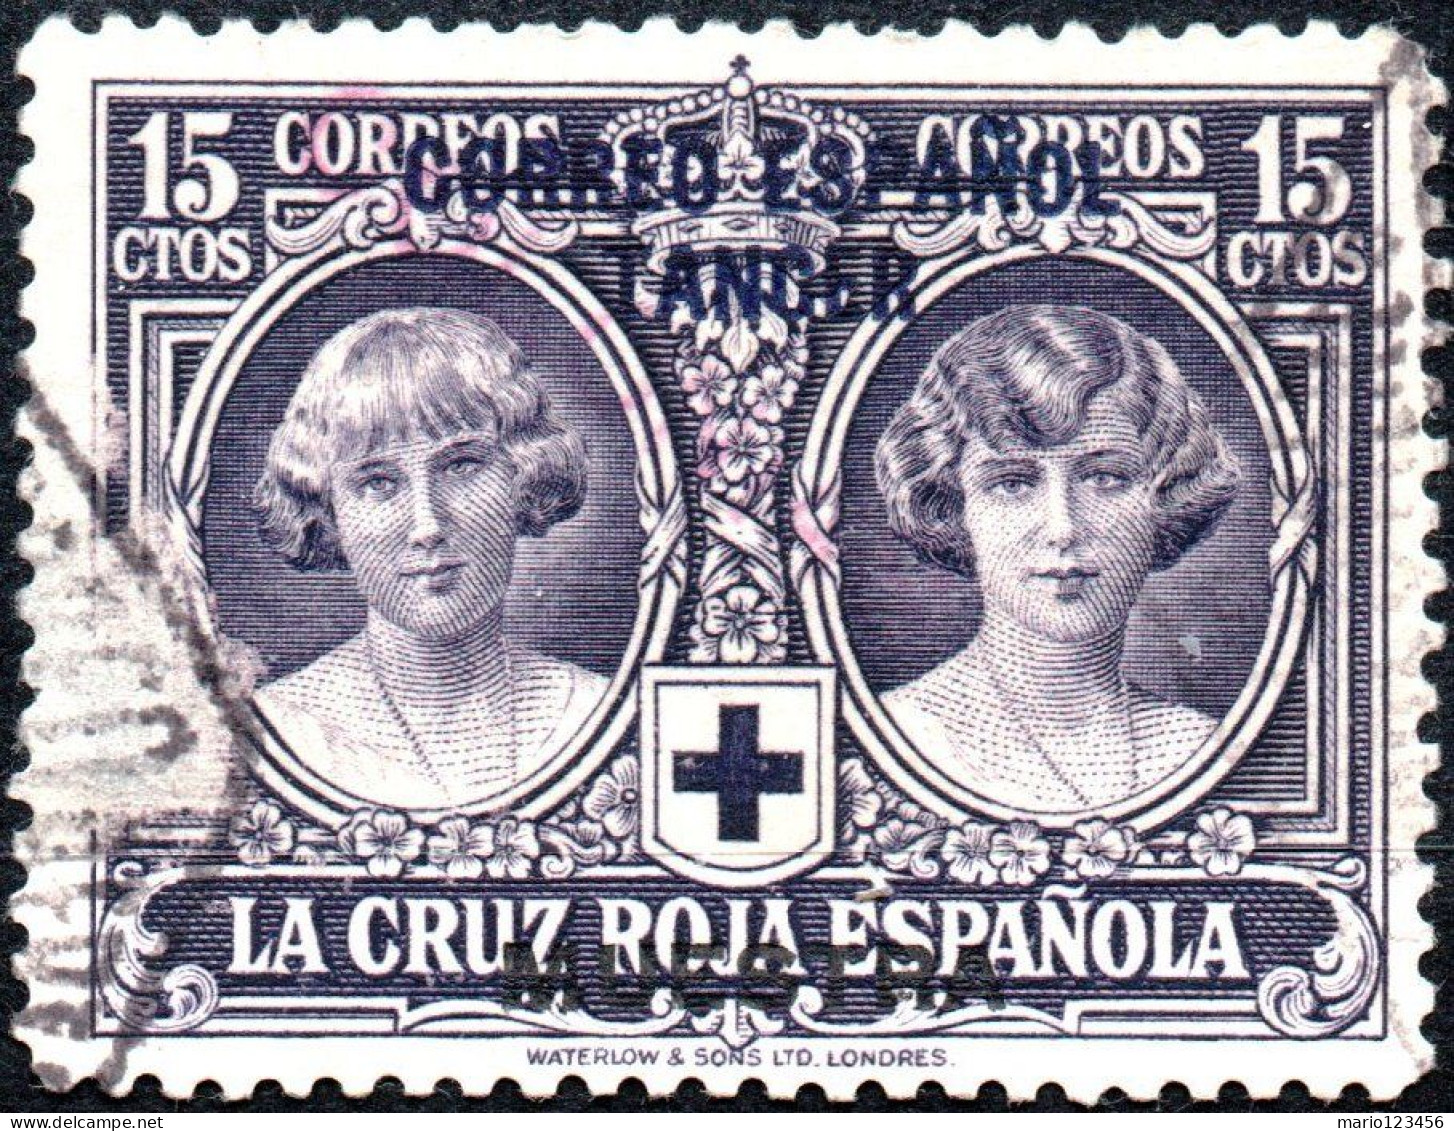 MAROCCO SPAGNOLO, SPANISH MOROCCO, TANGERI, TANGIER, CROCE ROSSA, RED CROSS, 1926, USATI Scott:ES-MA LB5, Yt:ES-MA 109 - Maroc Espagnol